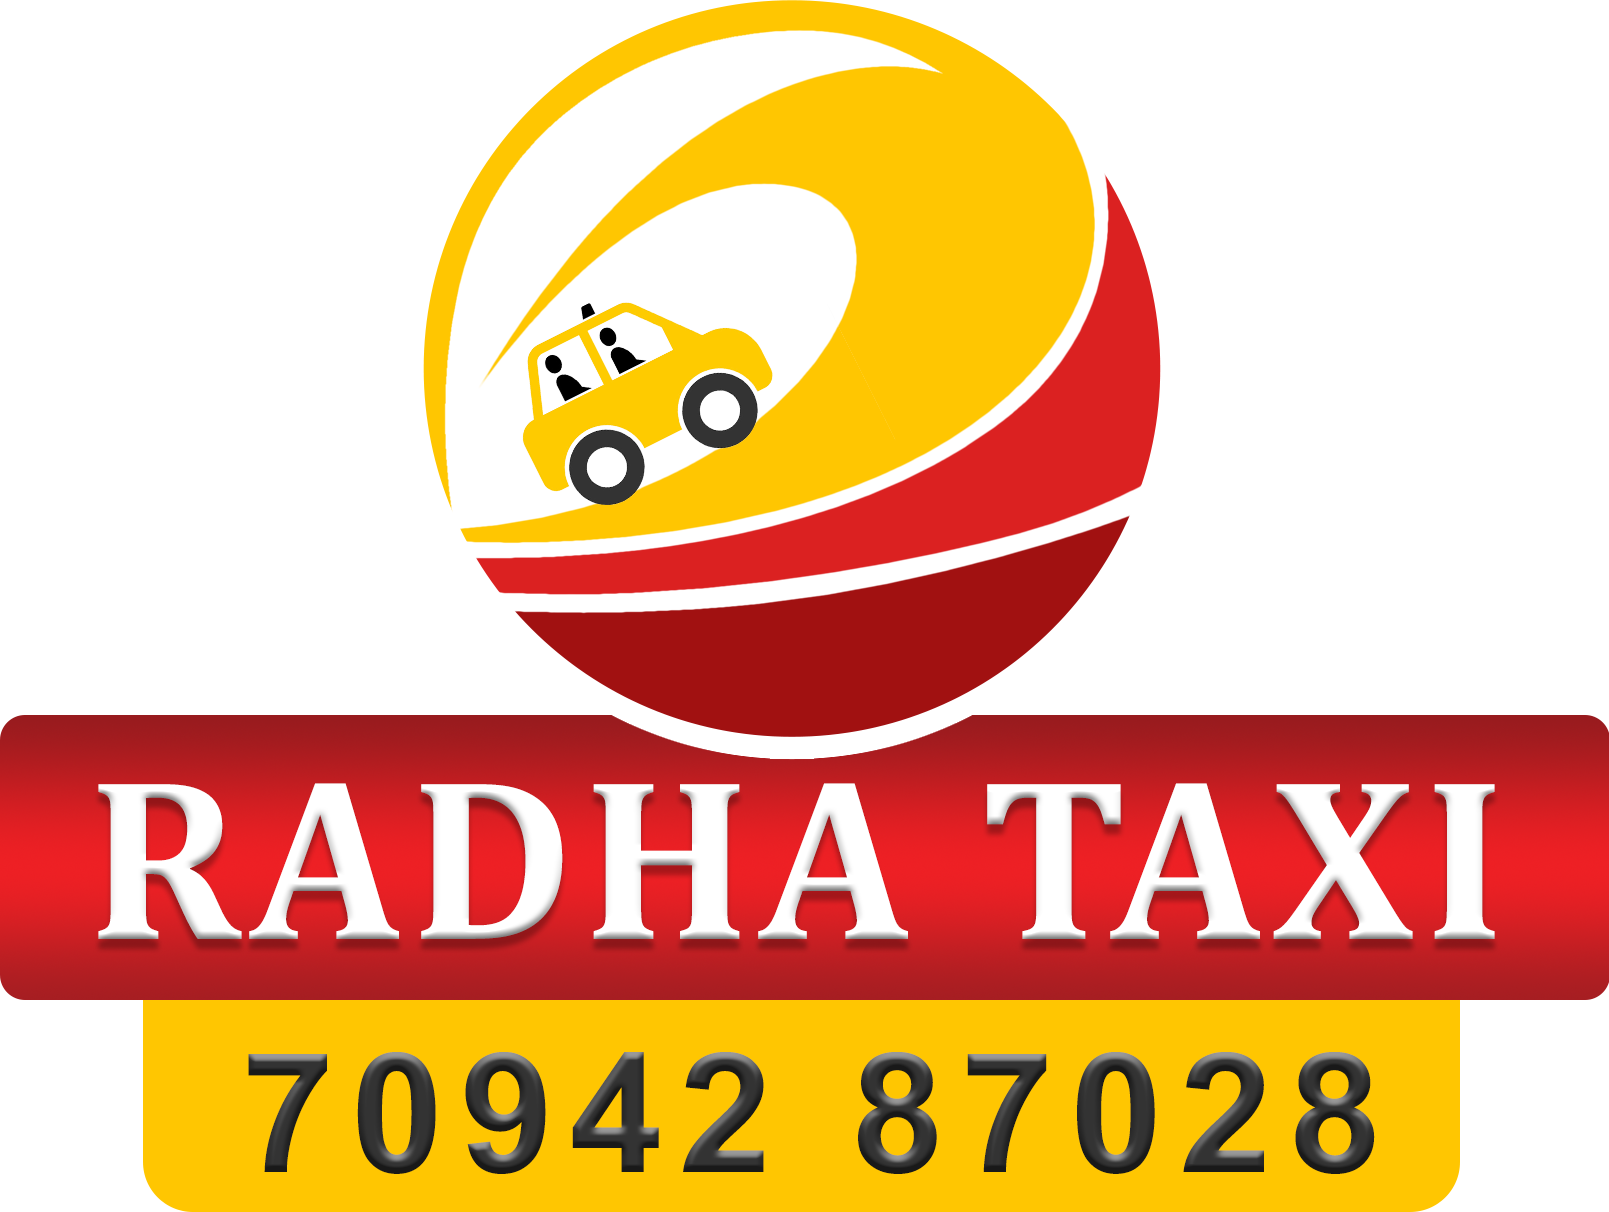 radha taxi - home page logo